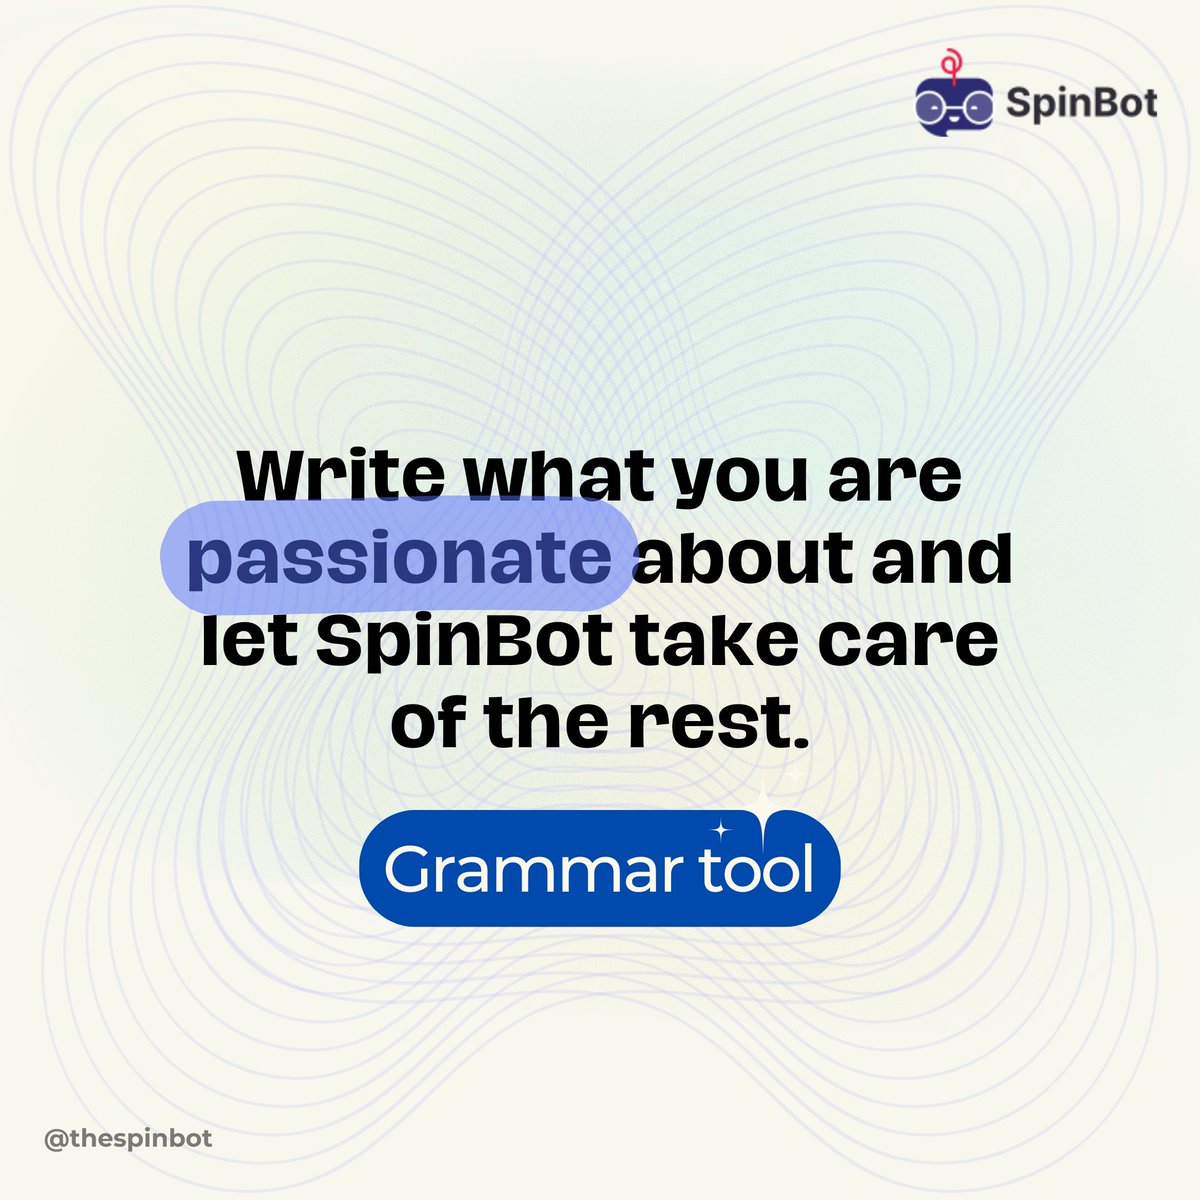 Which leaves a lasting impression.

#spinbot #aitool #freetool #trendingtool #explore #grammar #grammartools #writertools #creativewriting